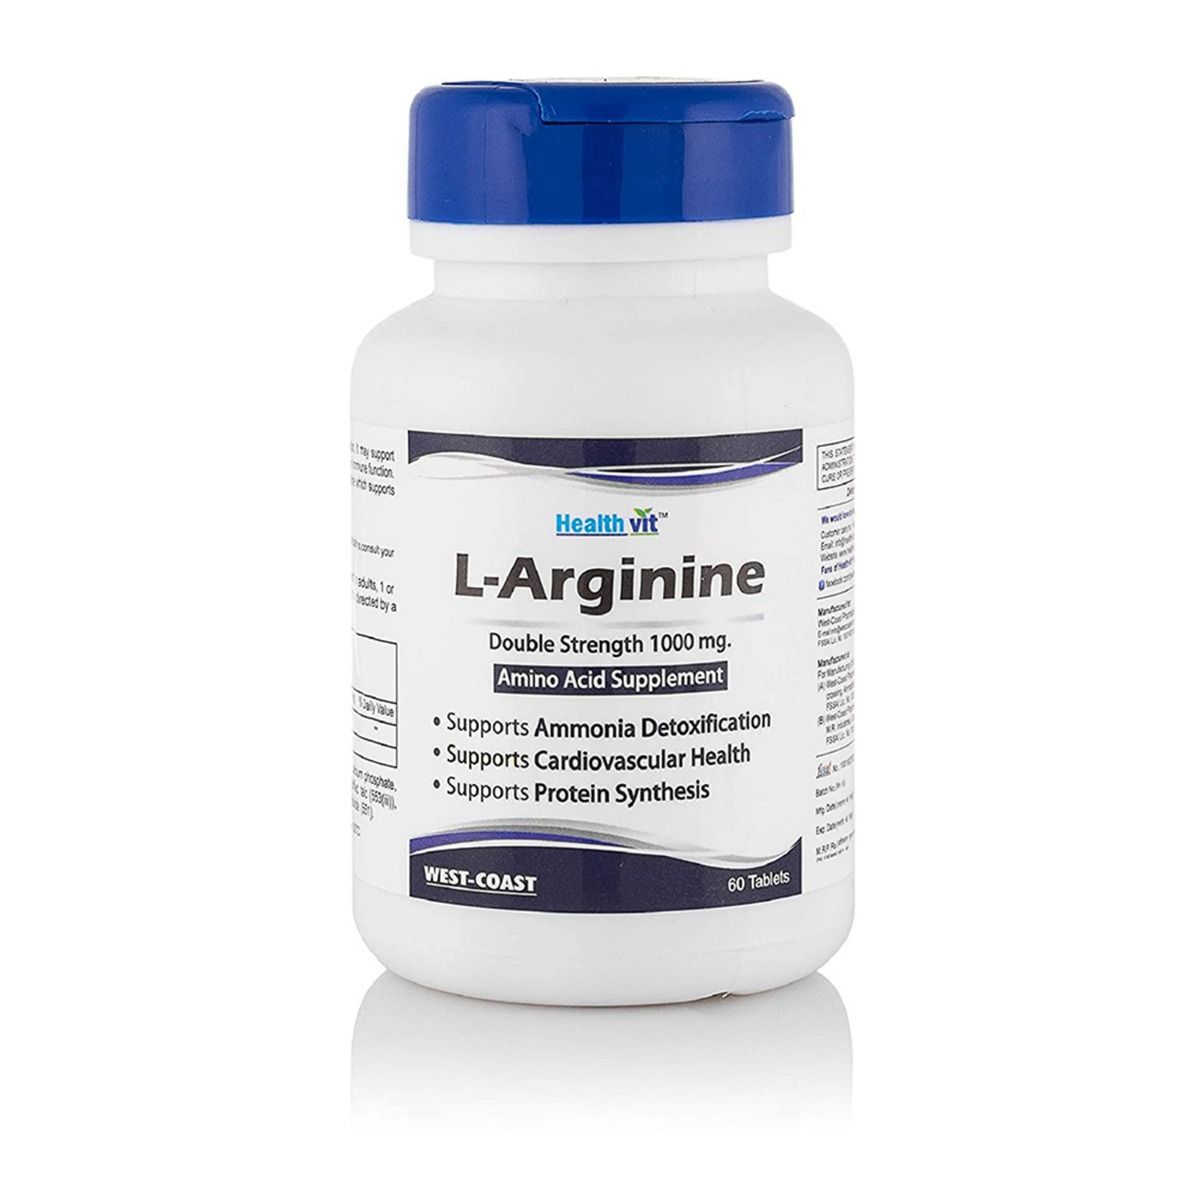 mimik itibaren Üzerine inşa etmek  Healthvit L-Arginine 1000 mg Amino Acid Supplement, 60 Tablets Price, Uses,  Side Effects, Composition - Apollo Pharmacy